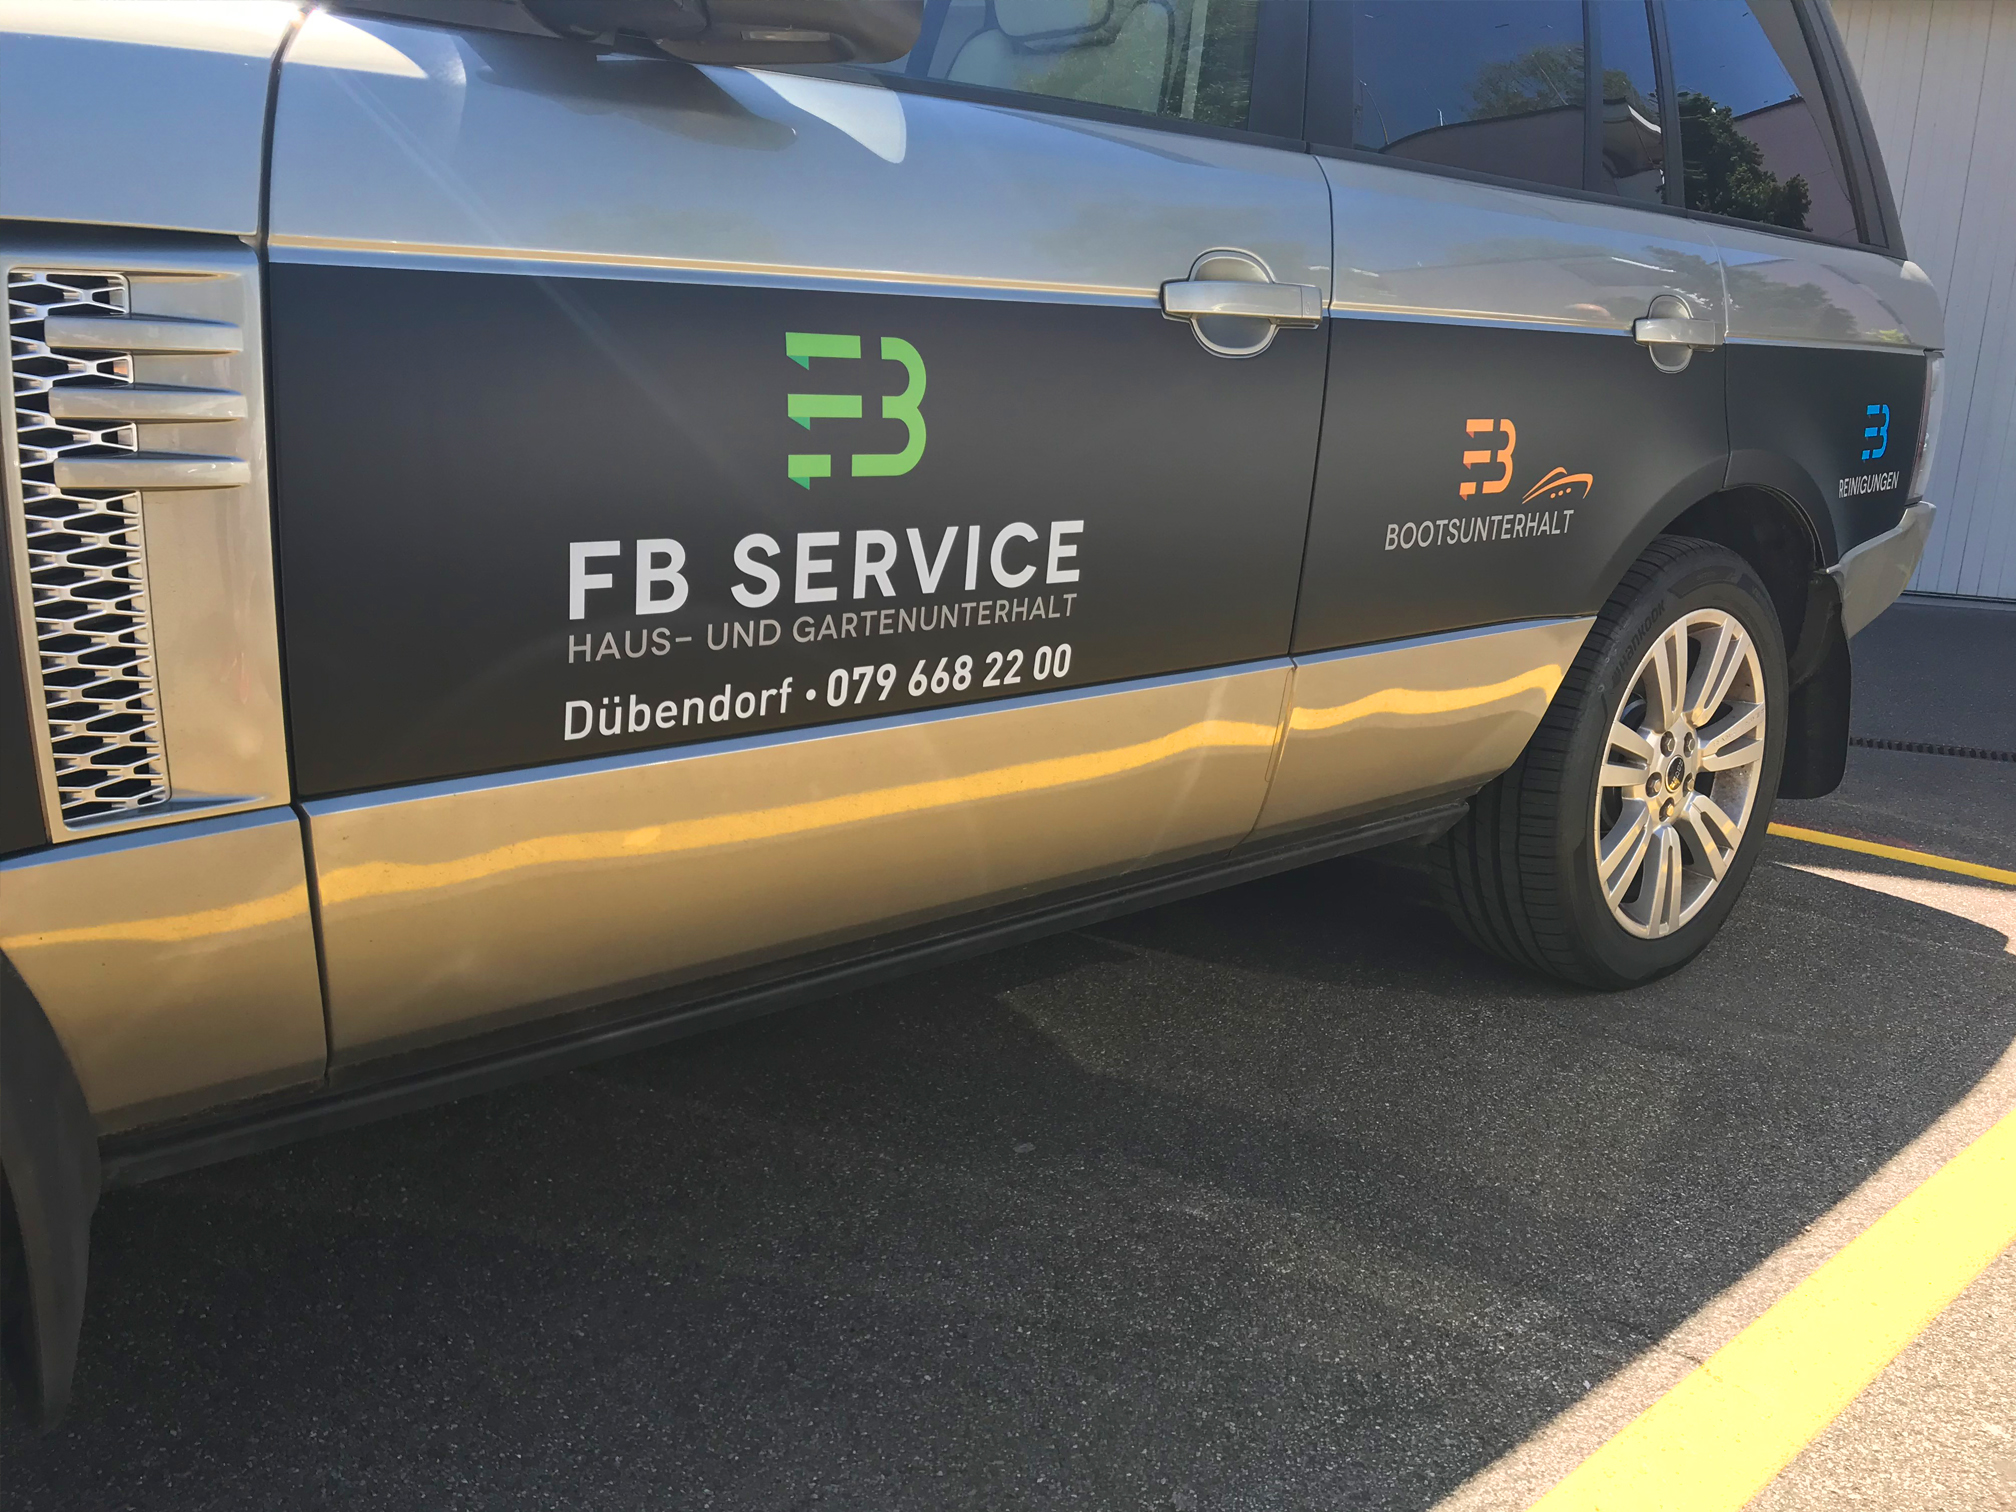 FB-Service Range Rover - Detail